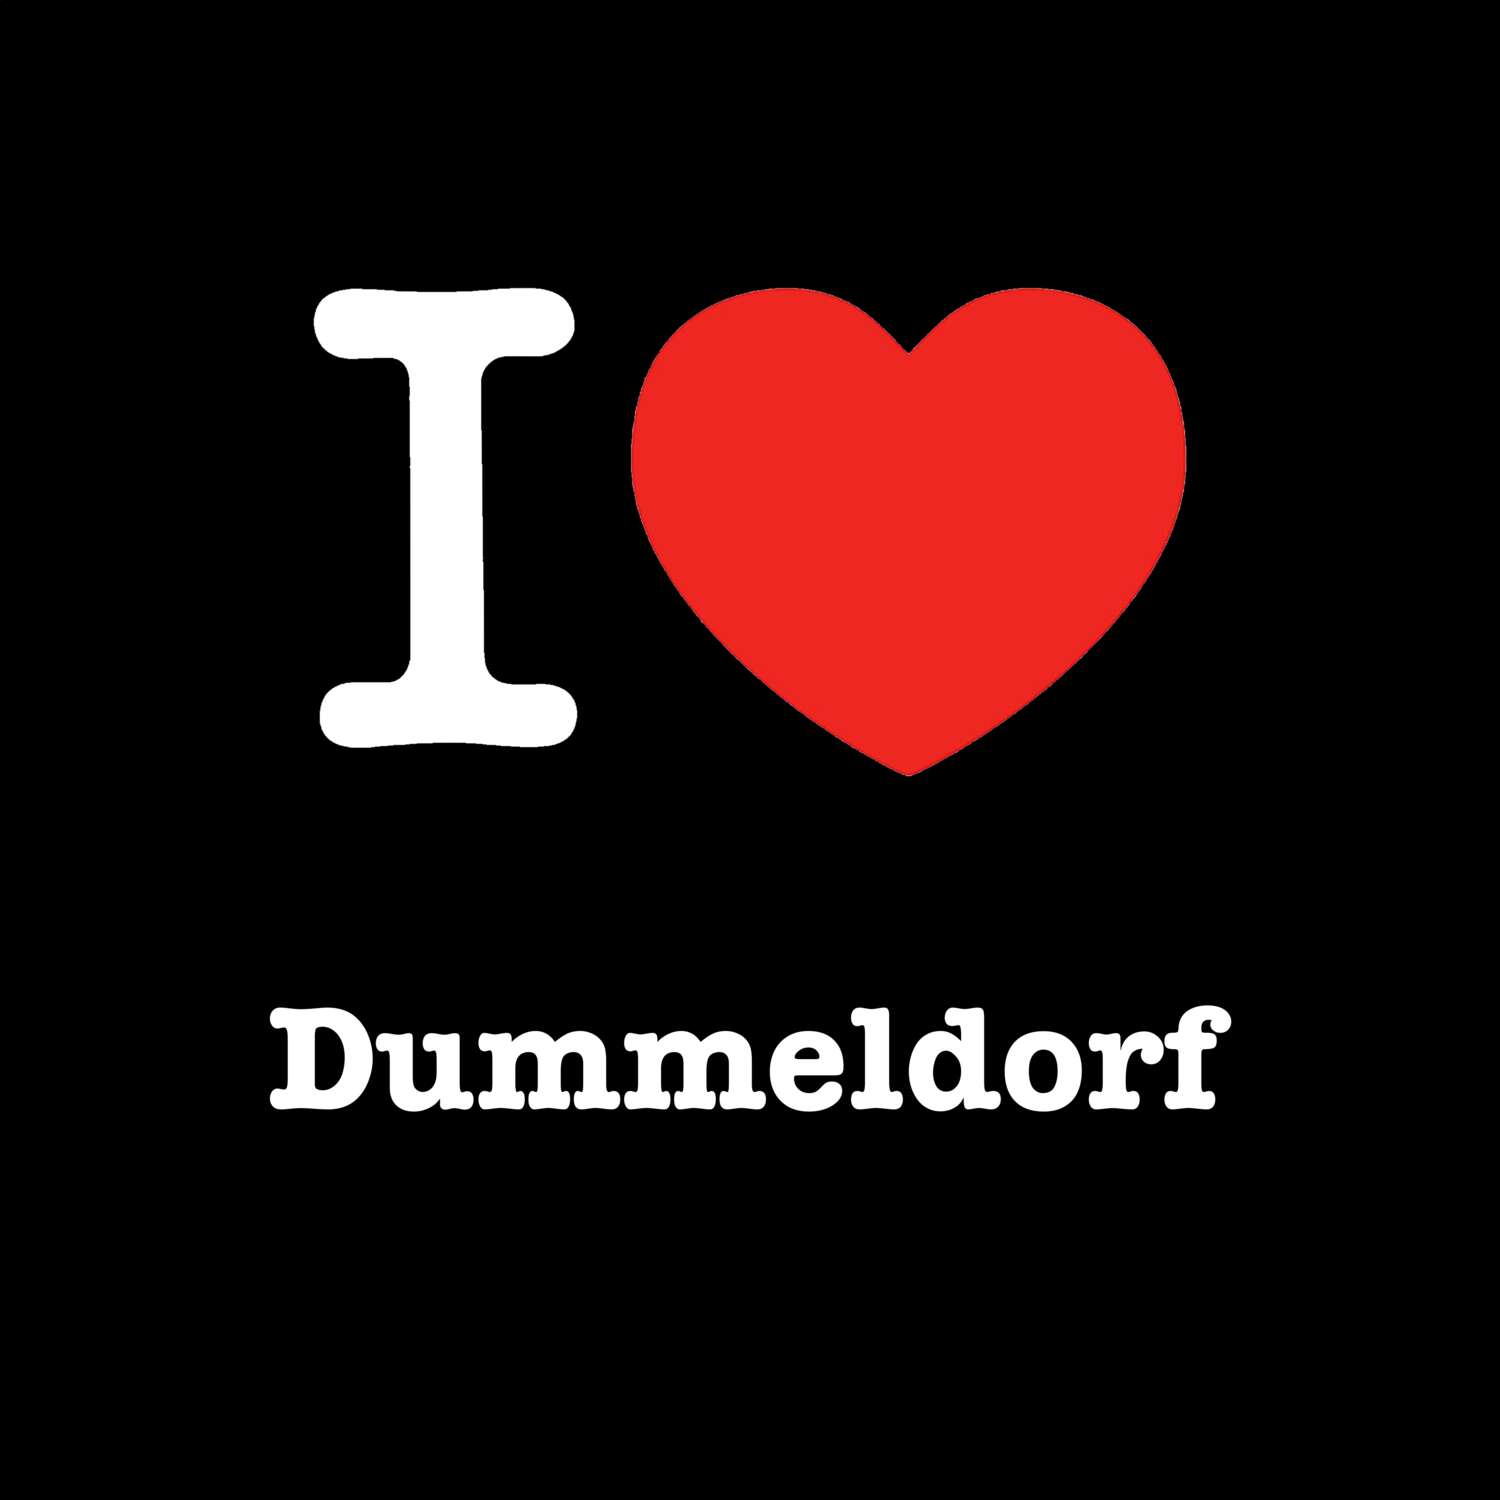 Dummeldorf T-Shirt »I love«